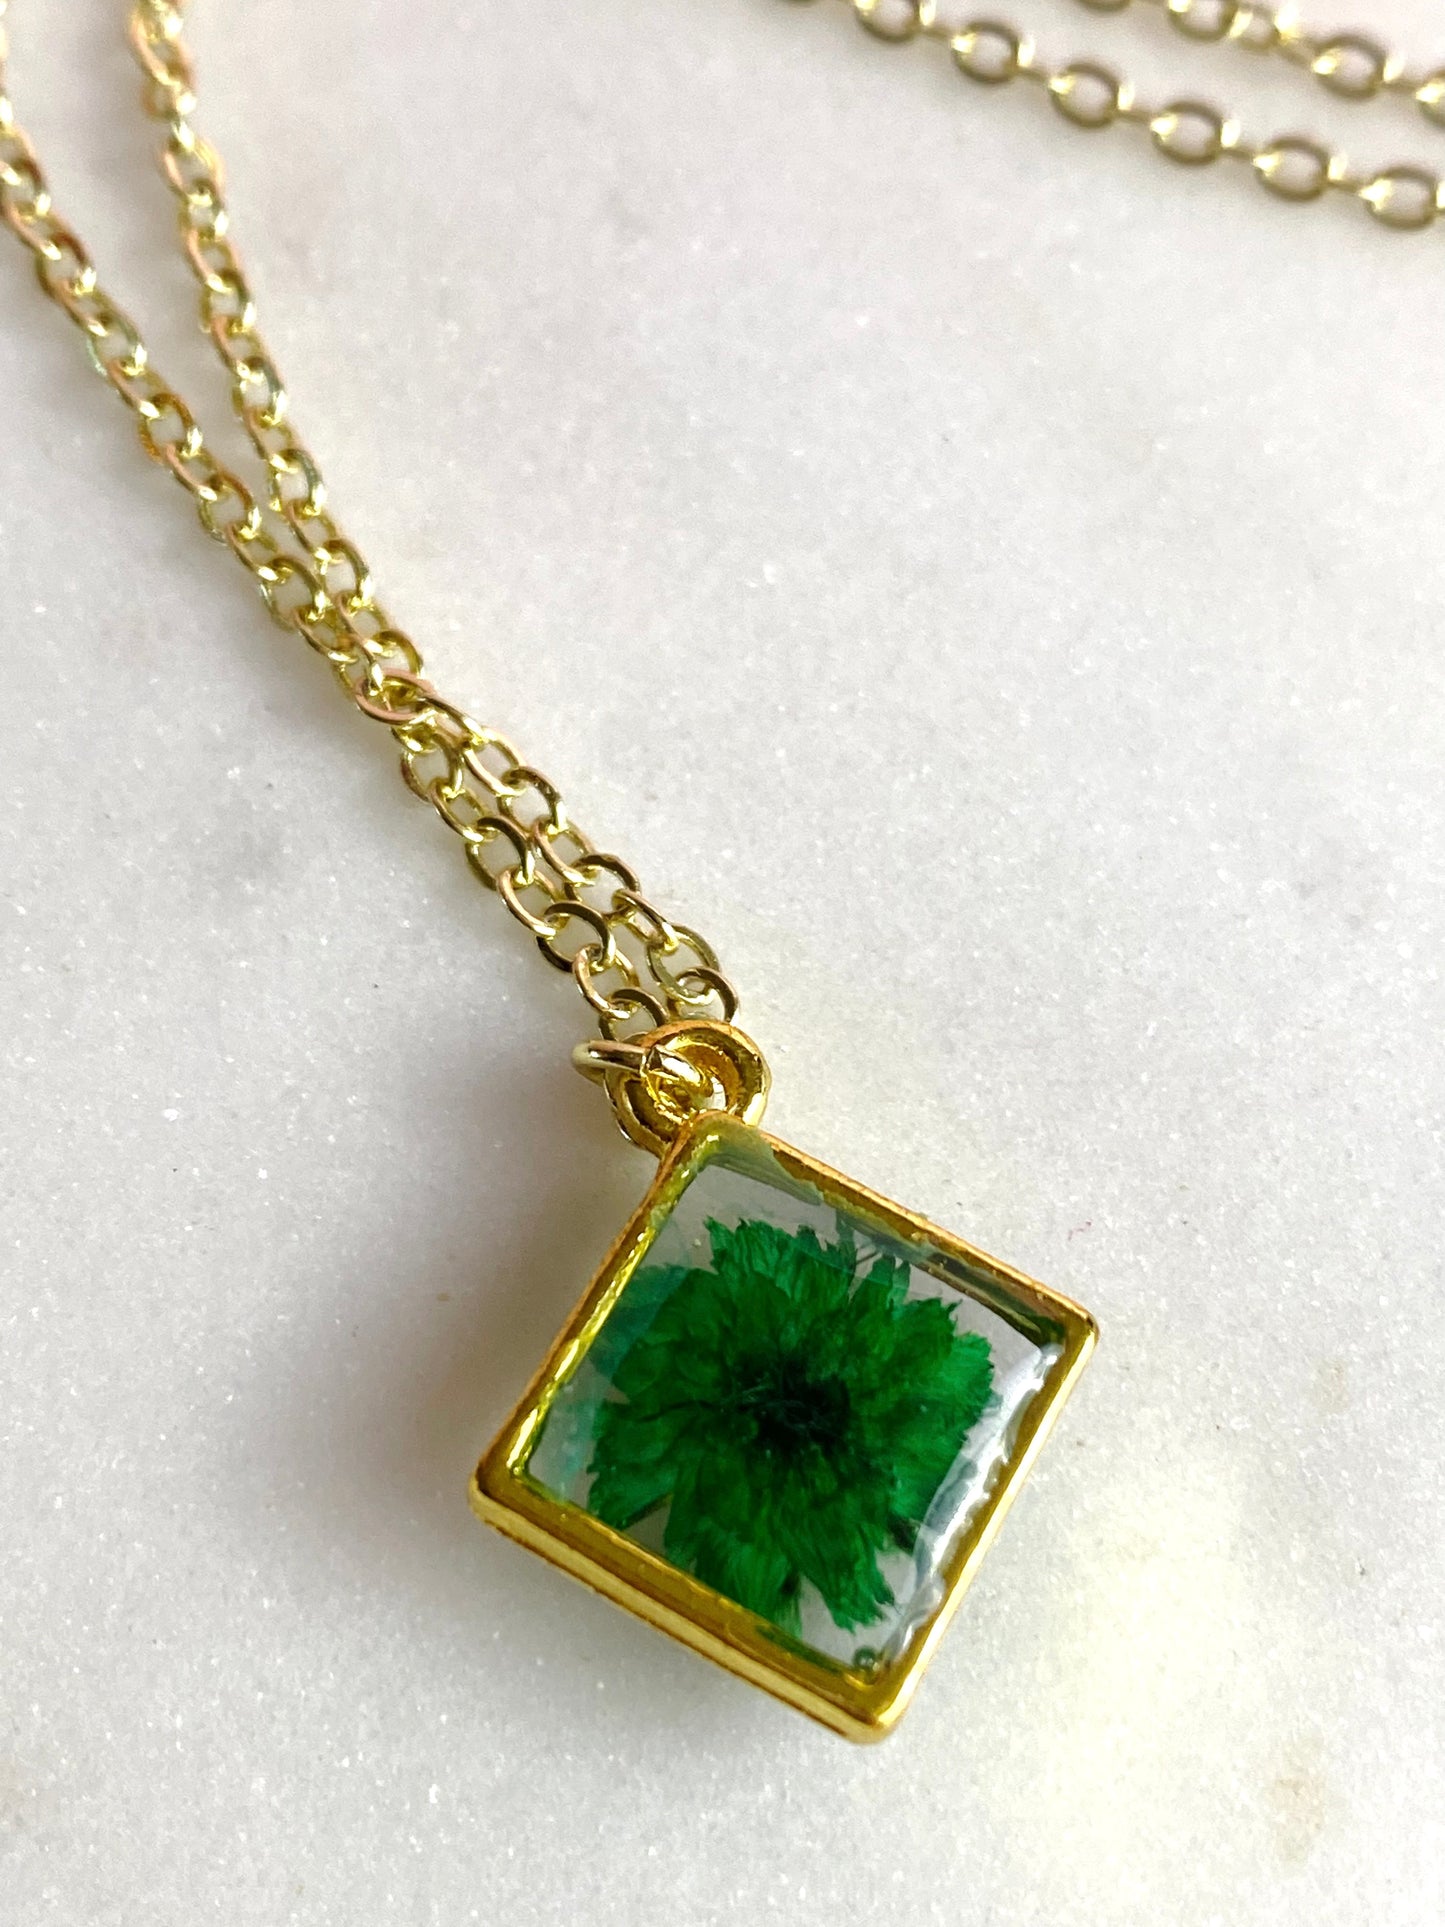 Pressed Flower Necklace | Green Daisy Diamond | Handmade Jewelry